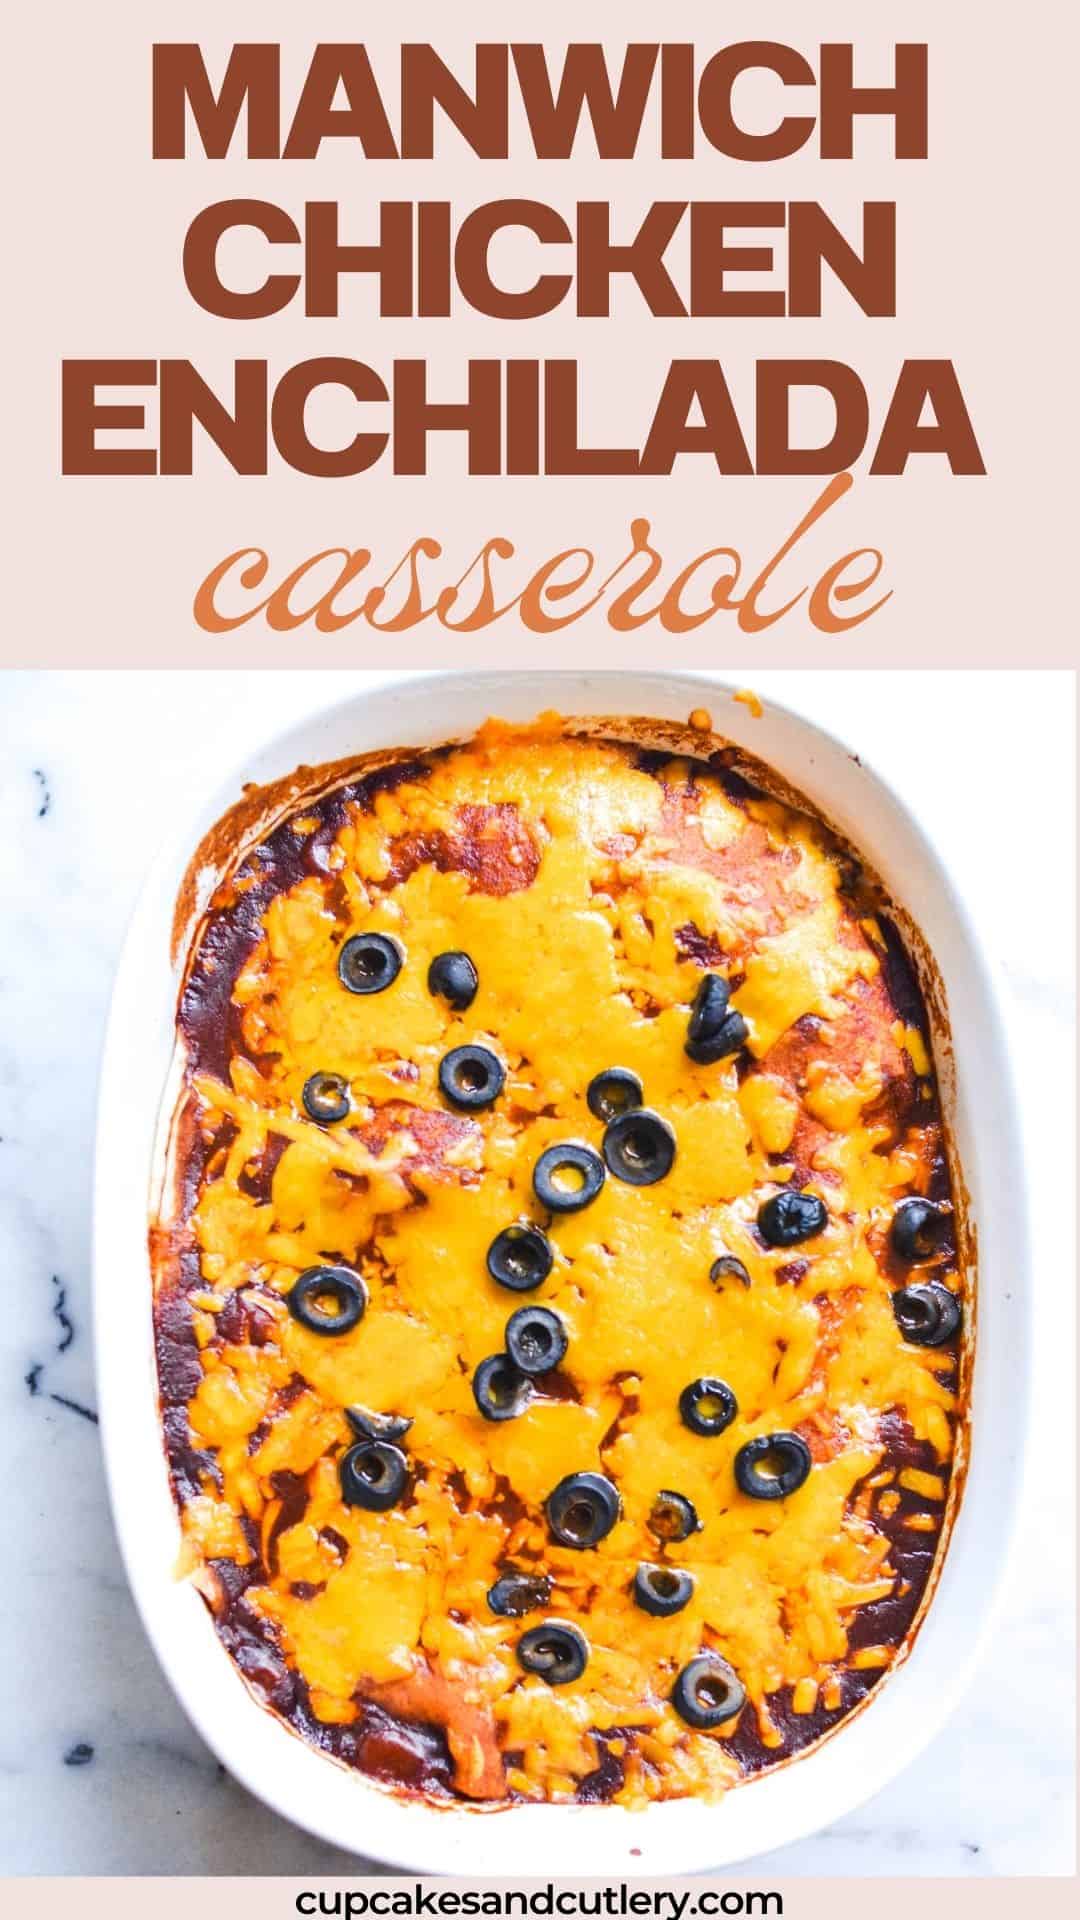 Manwich Chicken Enchilada Casserole Recipe